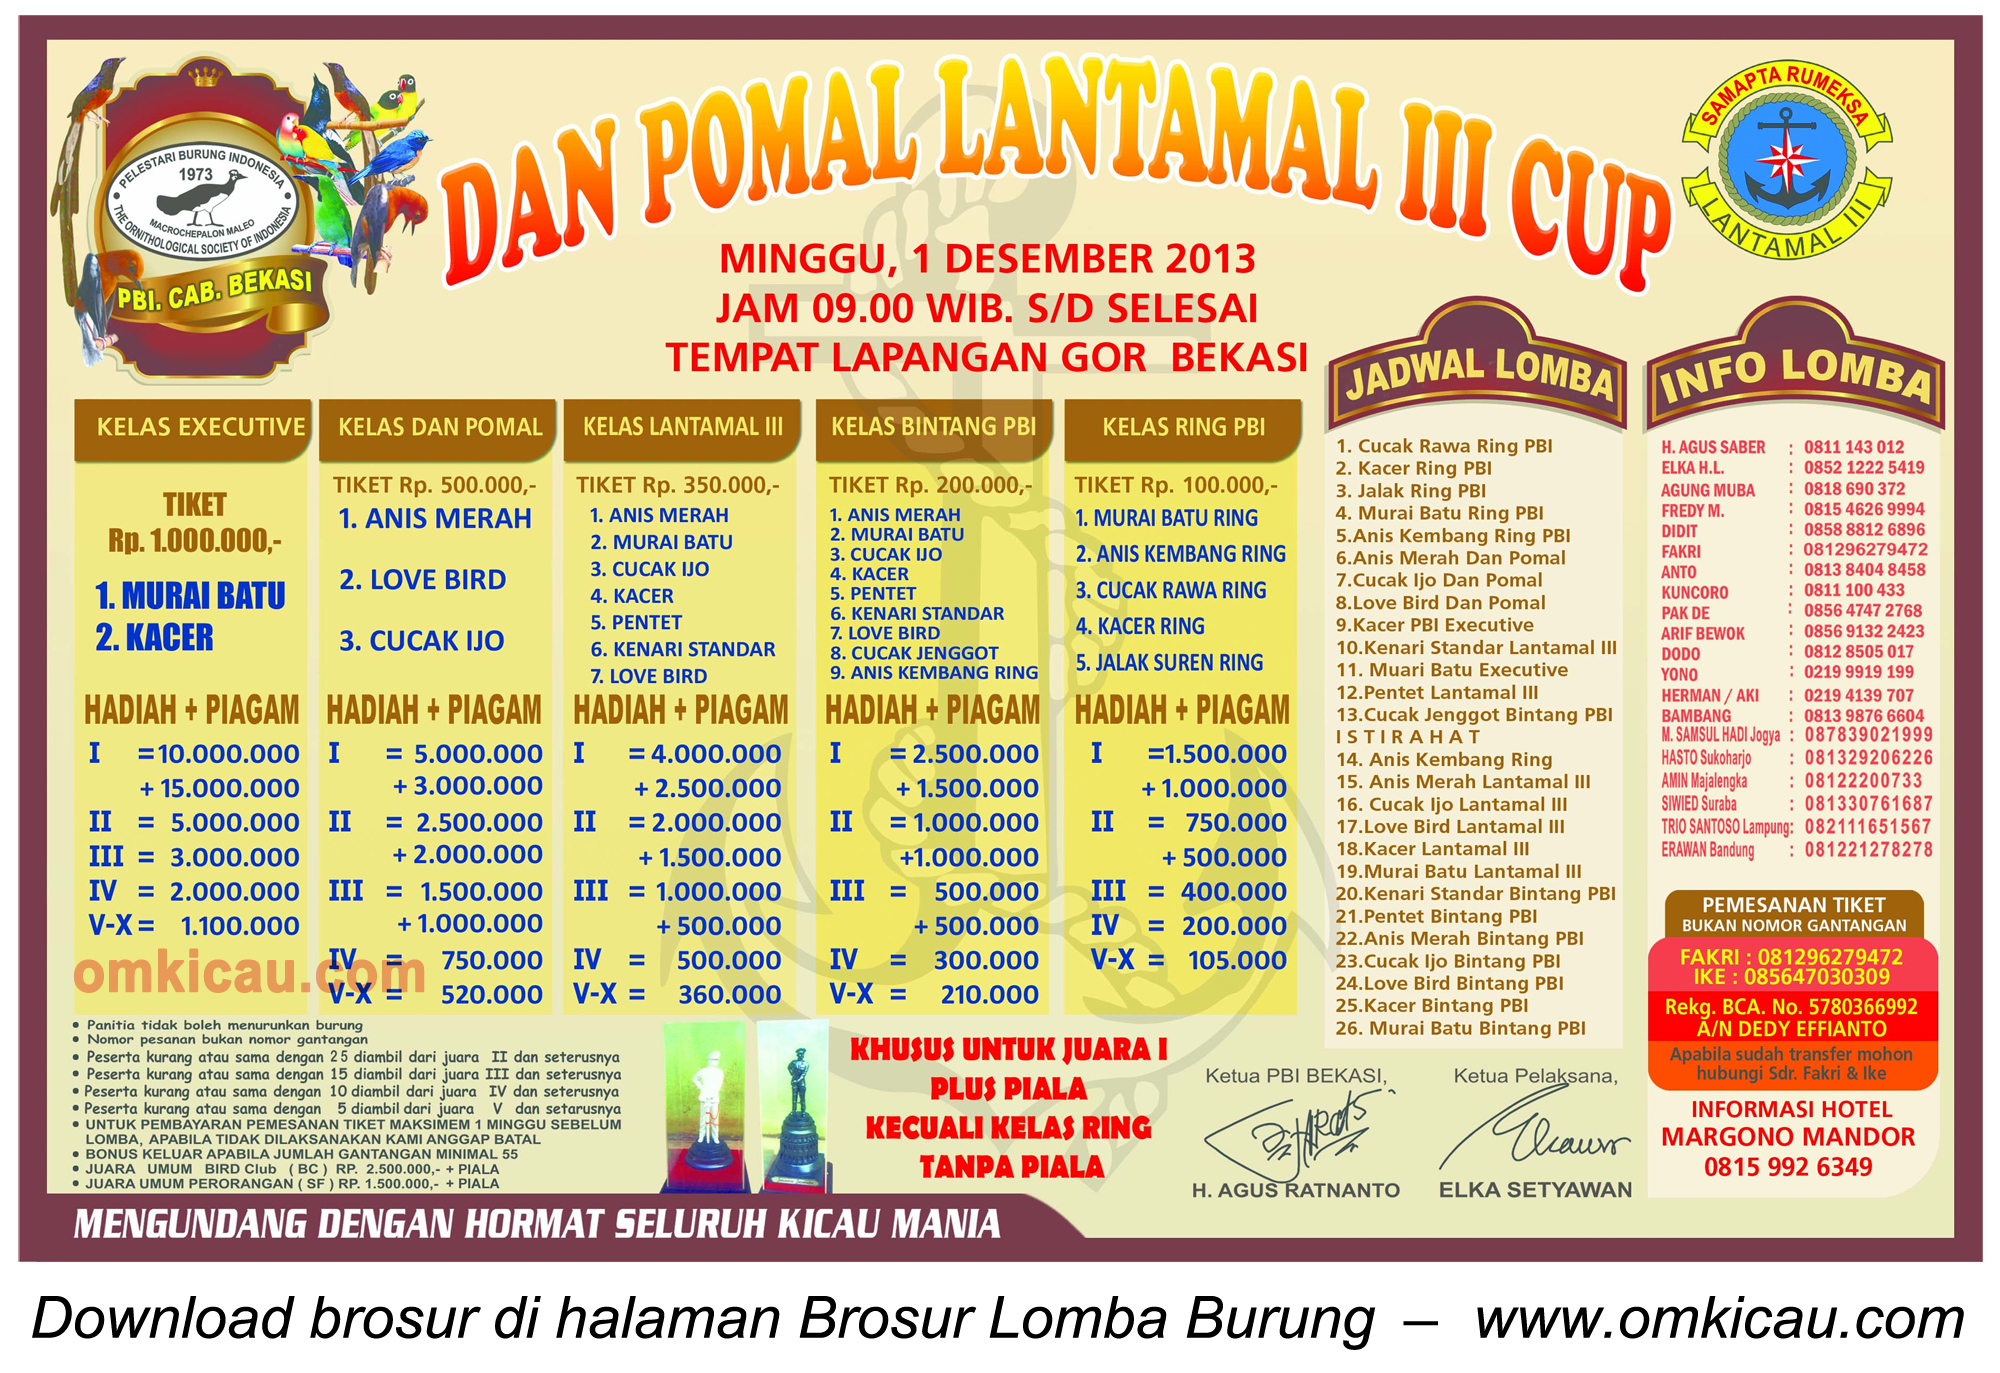 Brosur Lomba Burung Dan Pomal Lantamal III Cup, Bekasi, 1 Desember 2013